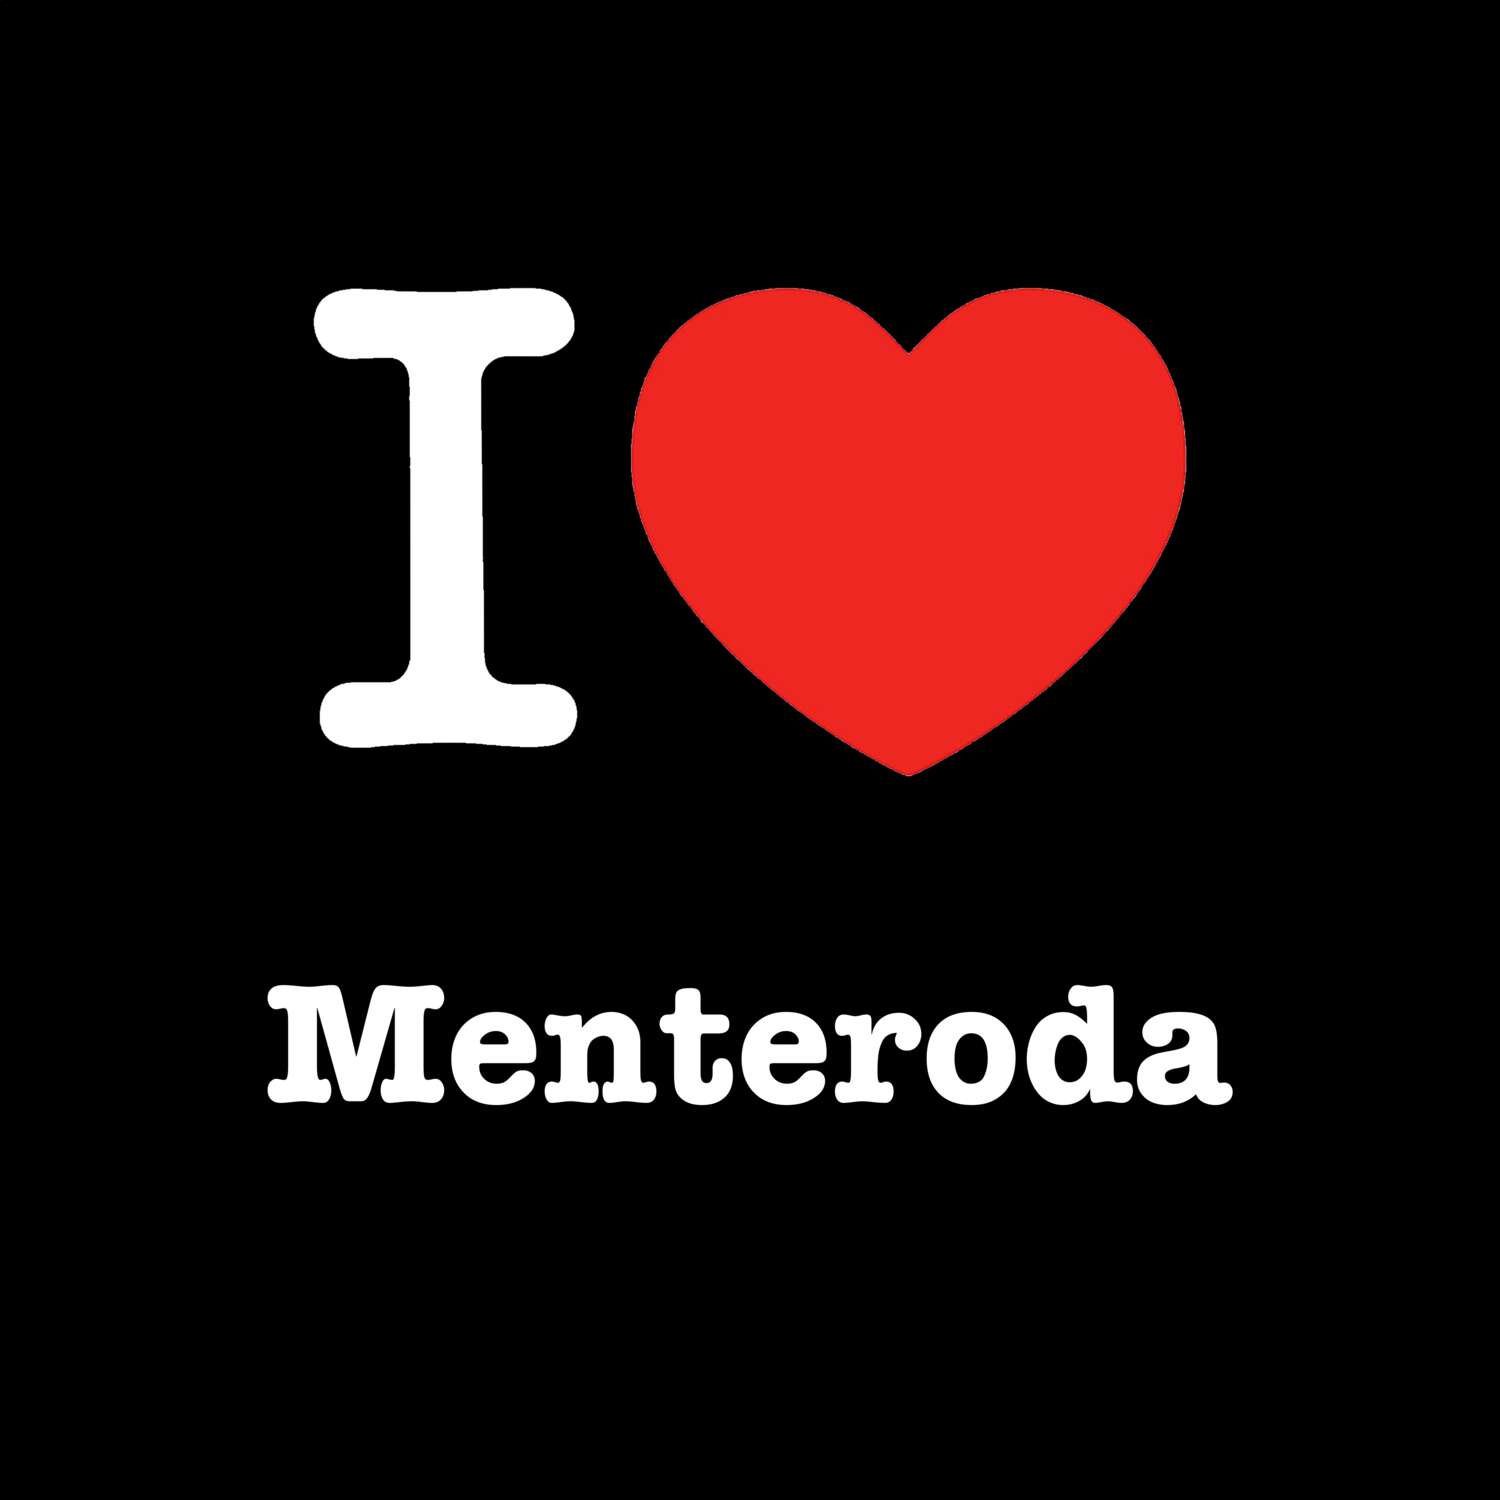 Menteroda T-Shirt »I love«